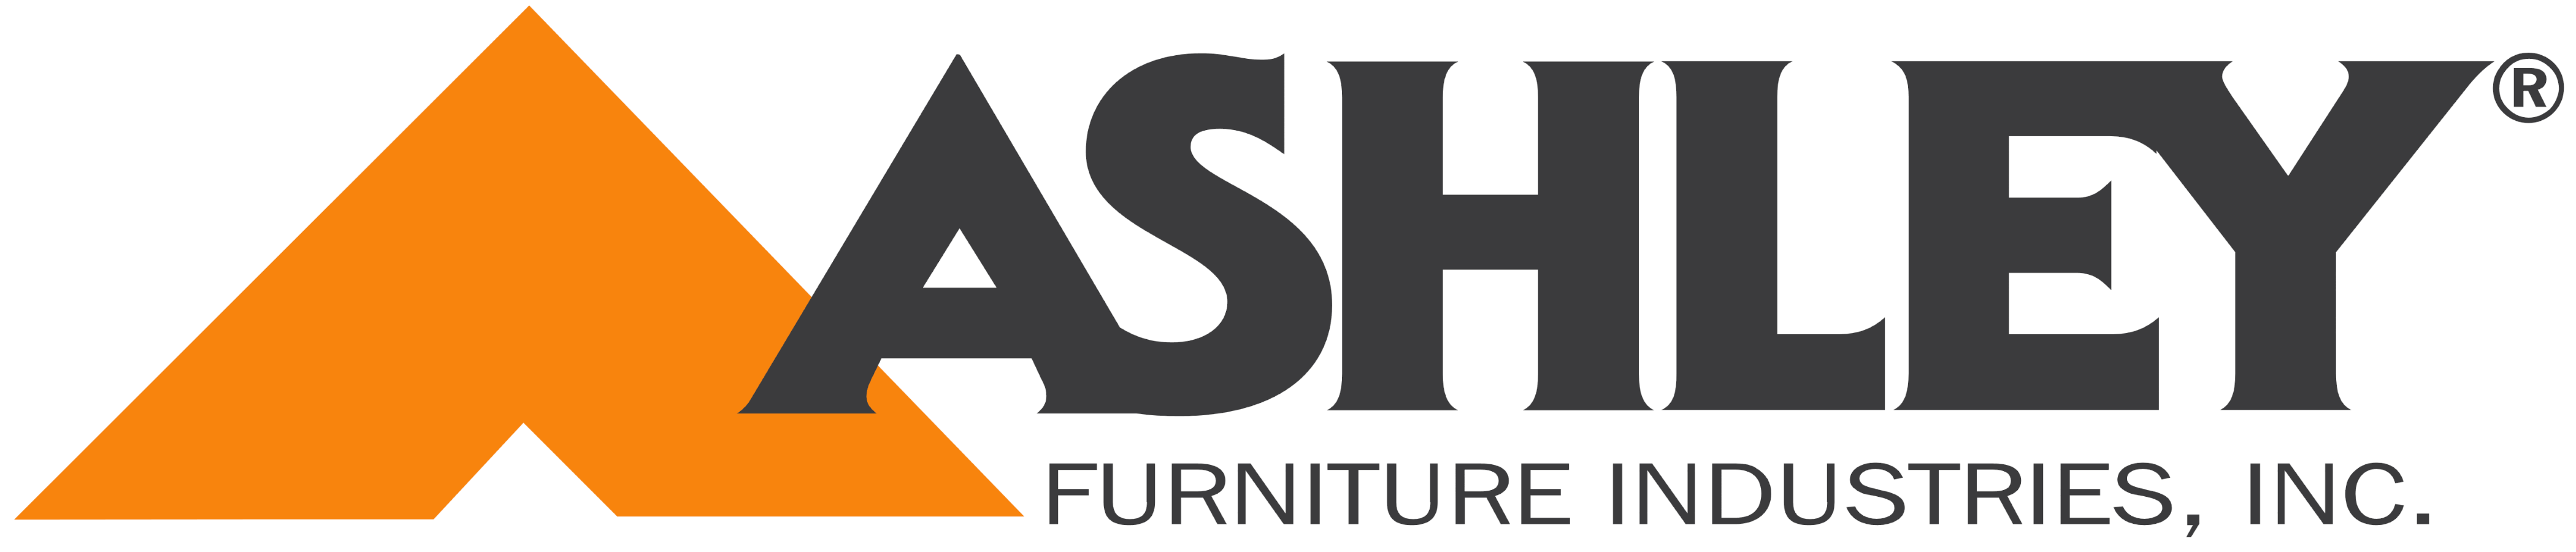 Ashley Logos